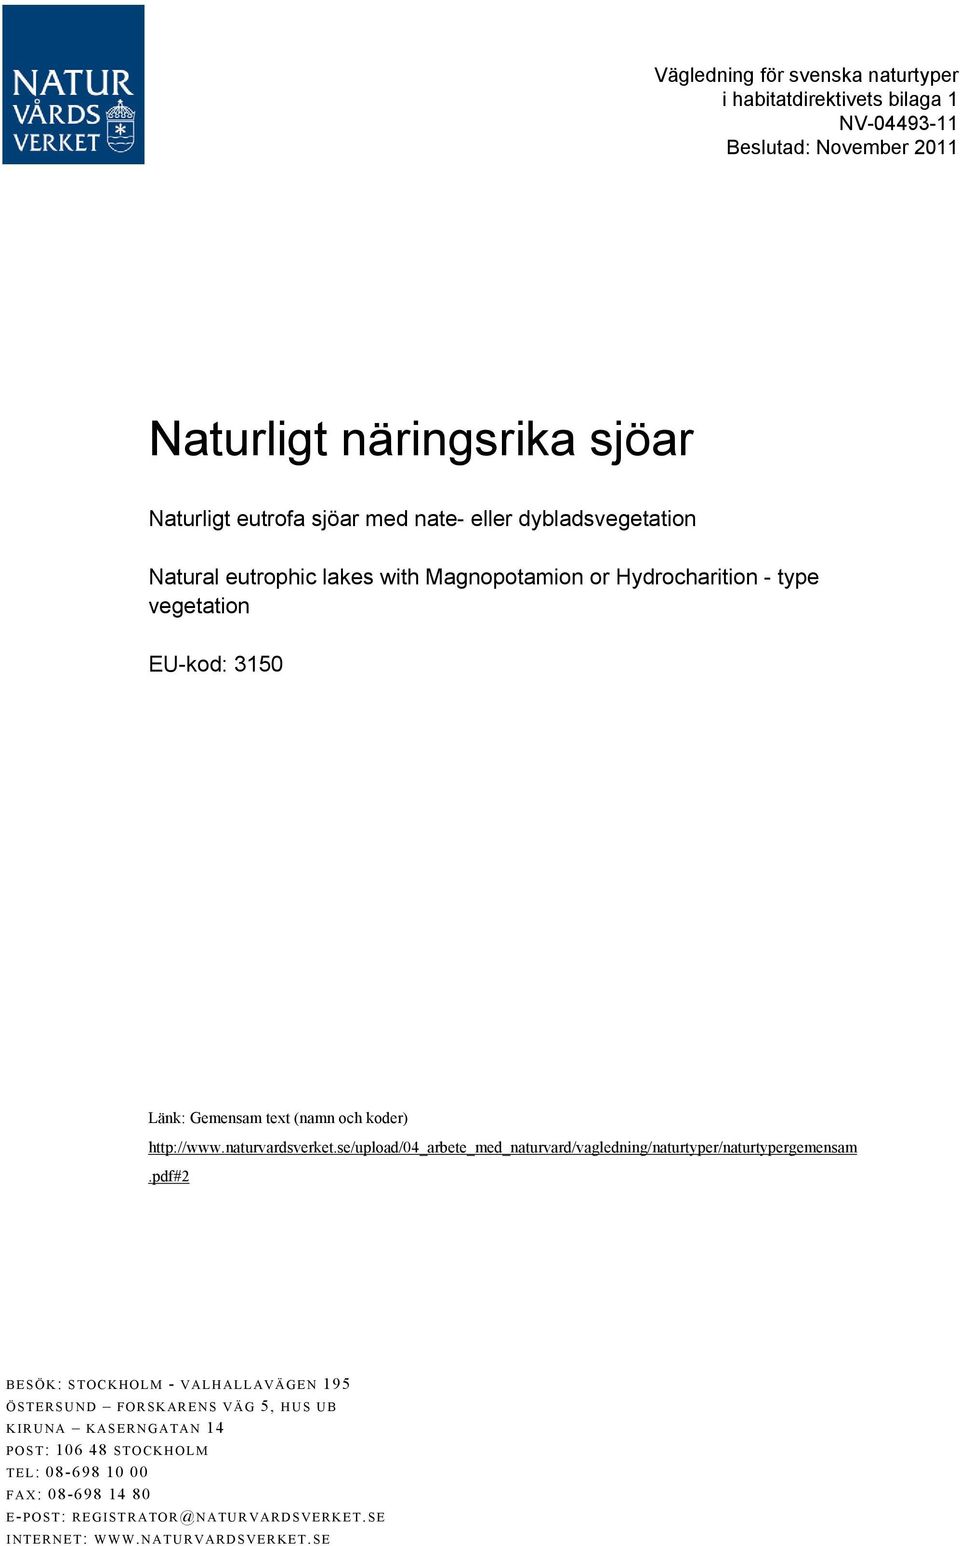 naturvardsverket.se/upload/04_arbete_med_naturvard/vagledning/naturtyper/naturtypergemensam.